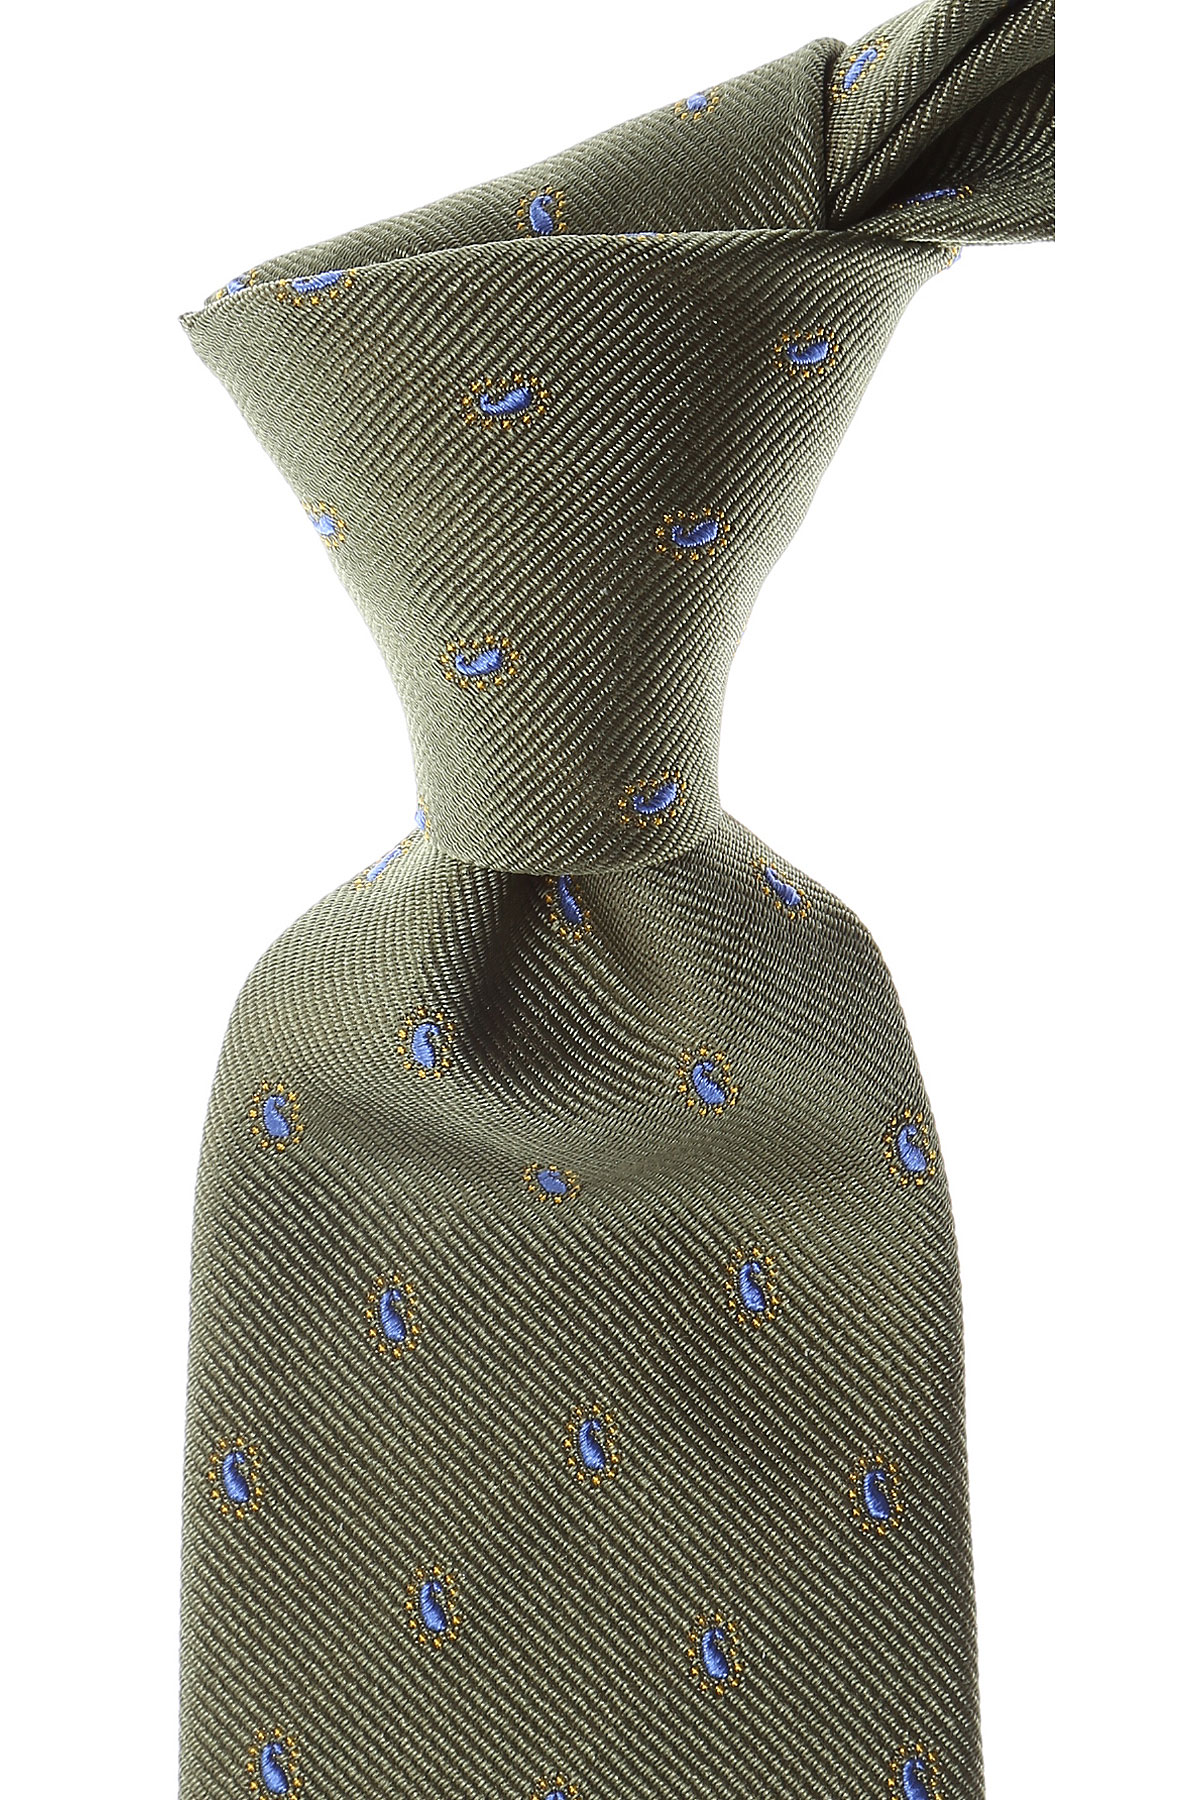 Cravates Moschino , Vert olive, Soie, 2017